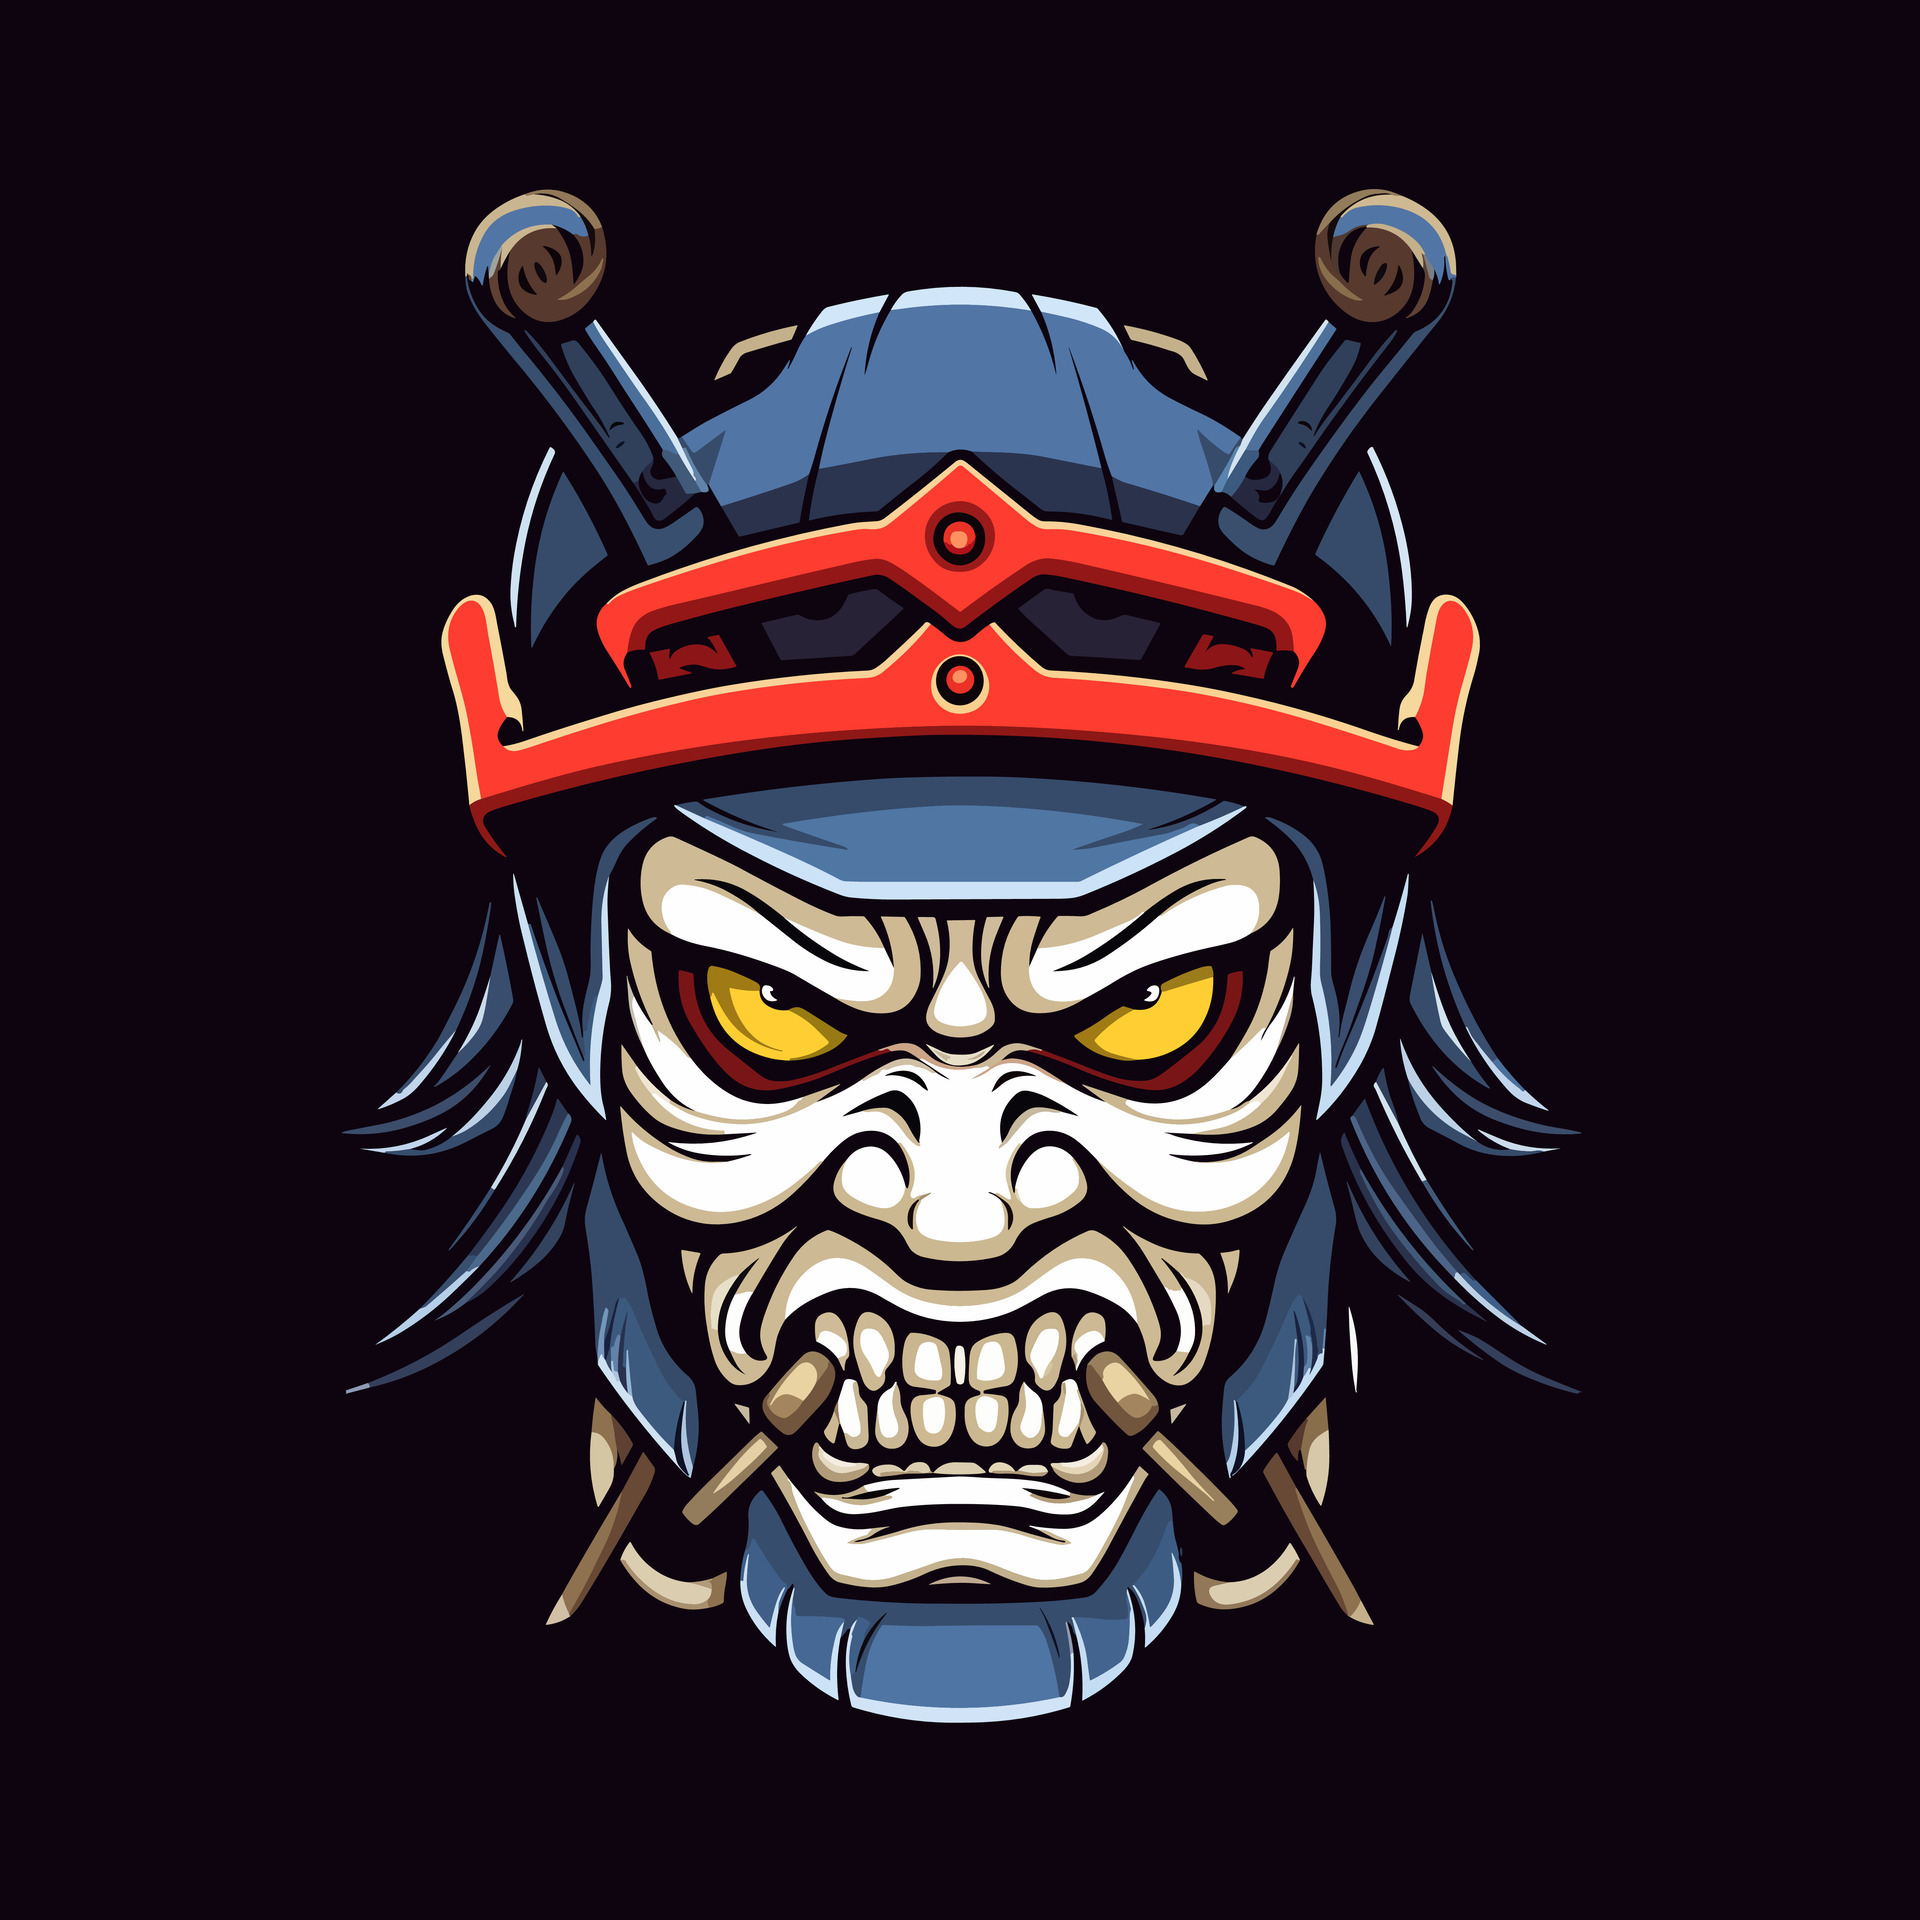 zombie samurai armor hand drawn logo design illustration 25917627 ...